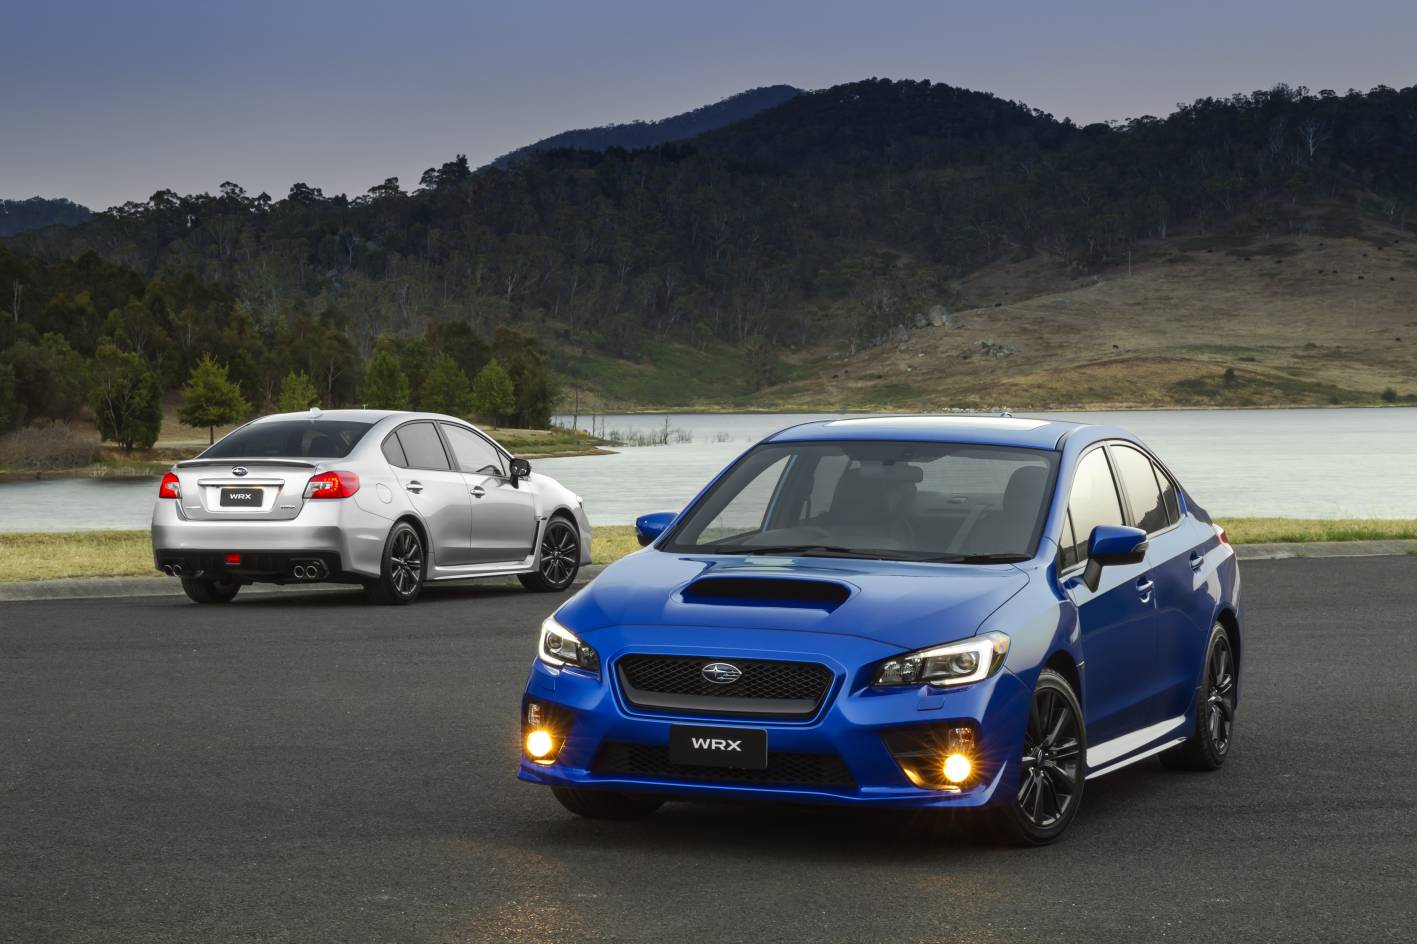 2015 Subaru WRX on sale in Australia from $38,990